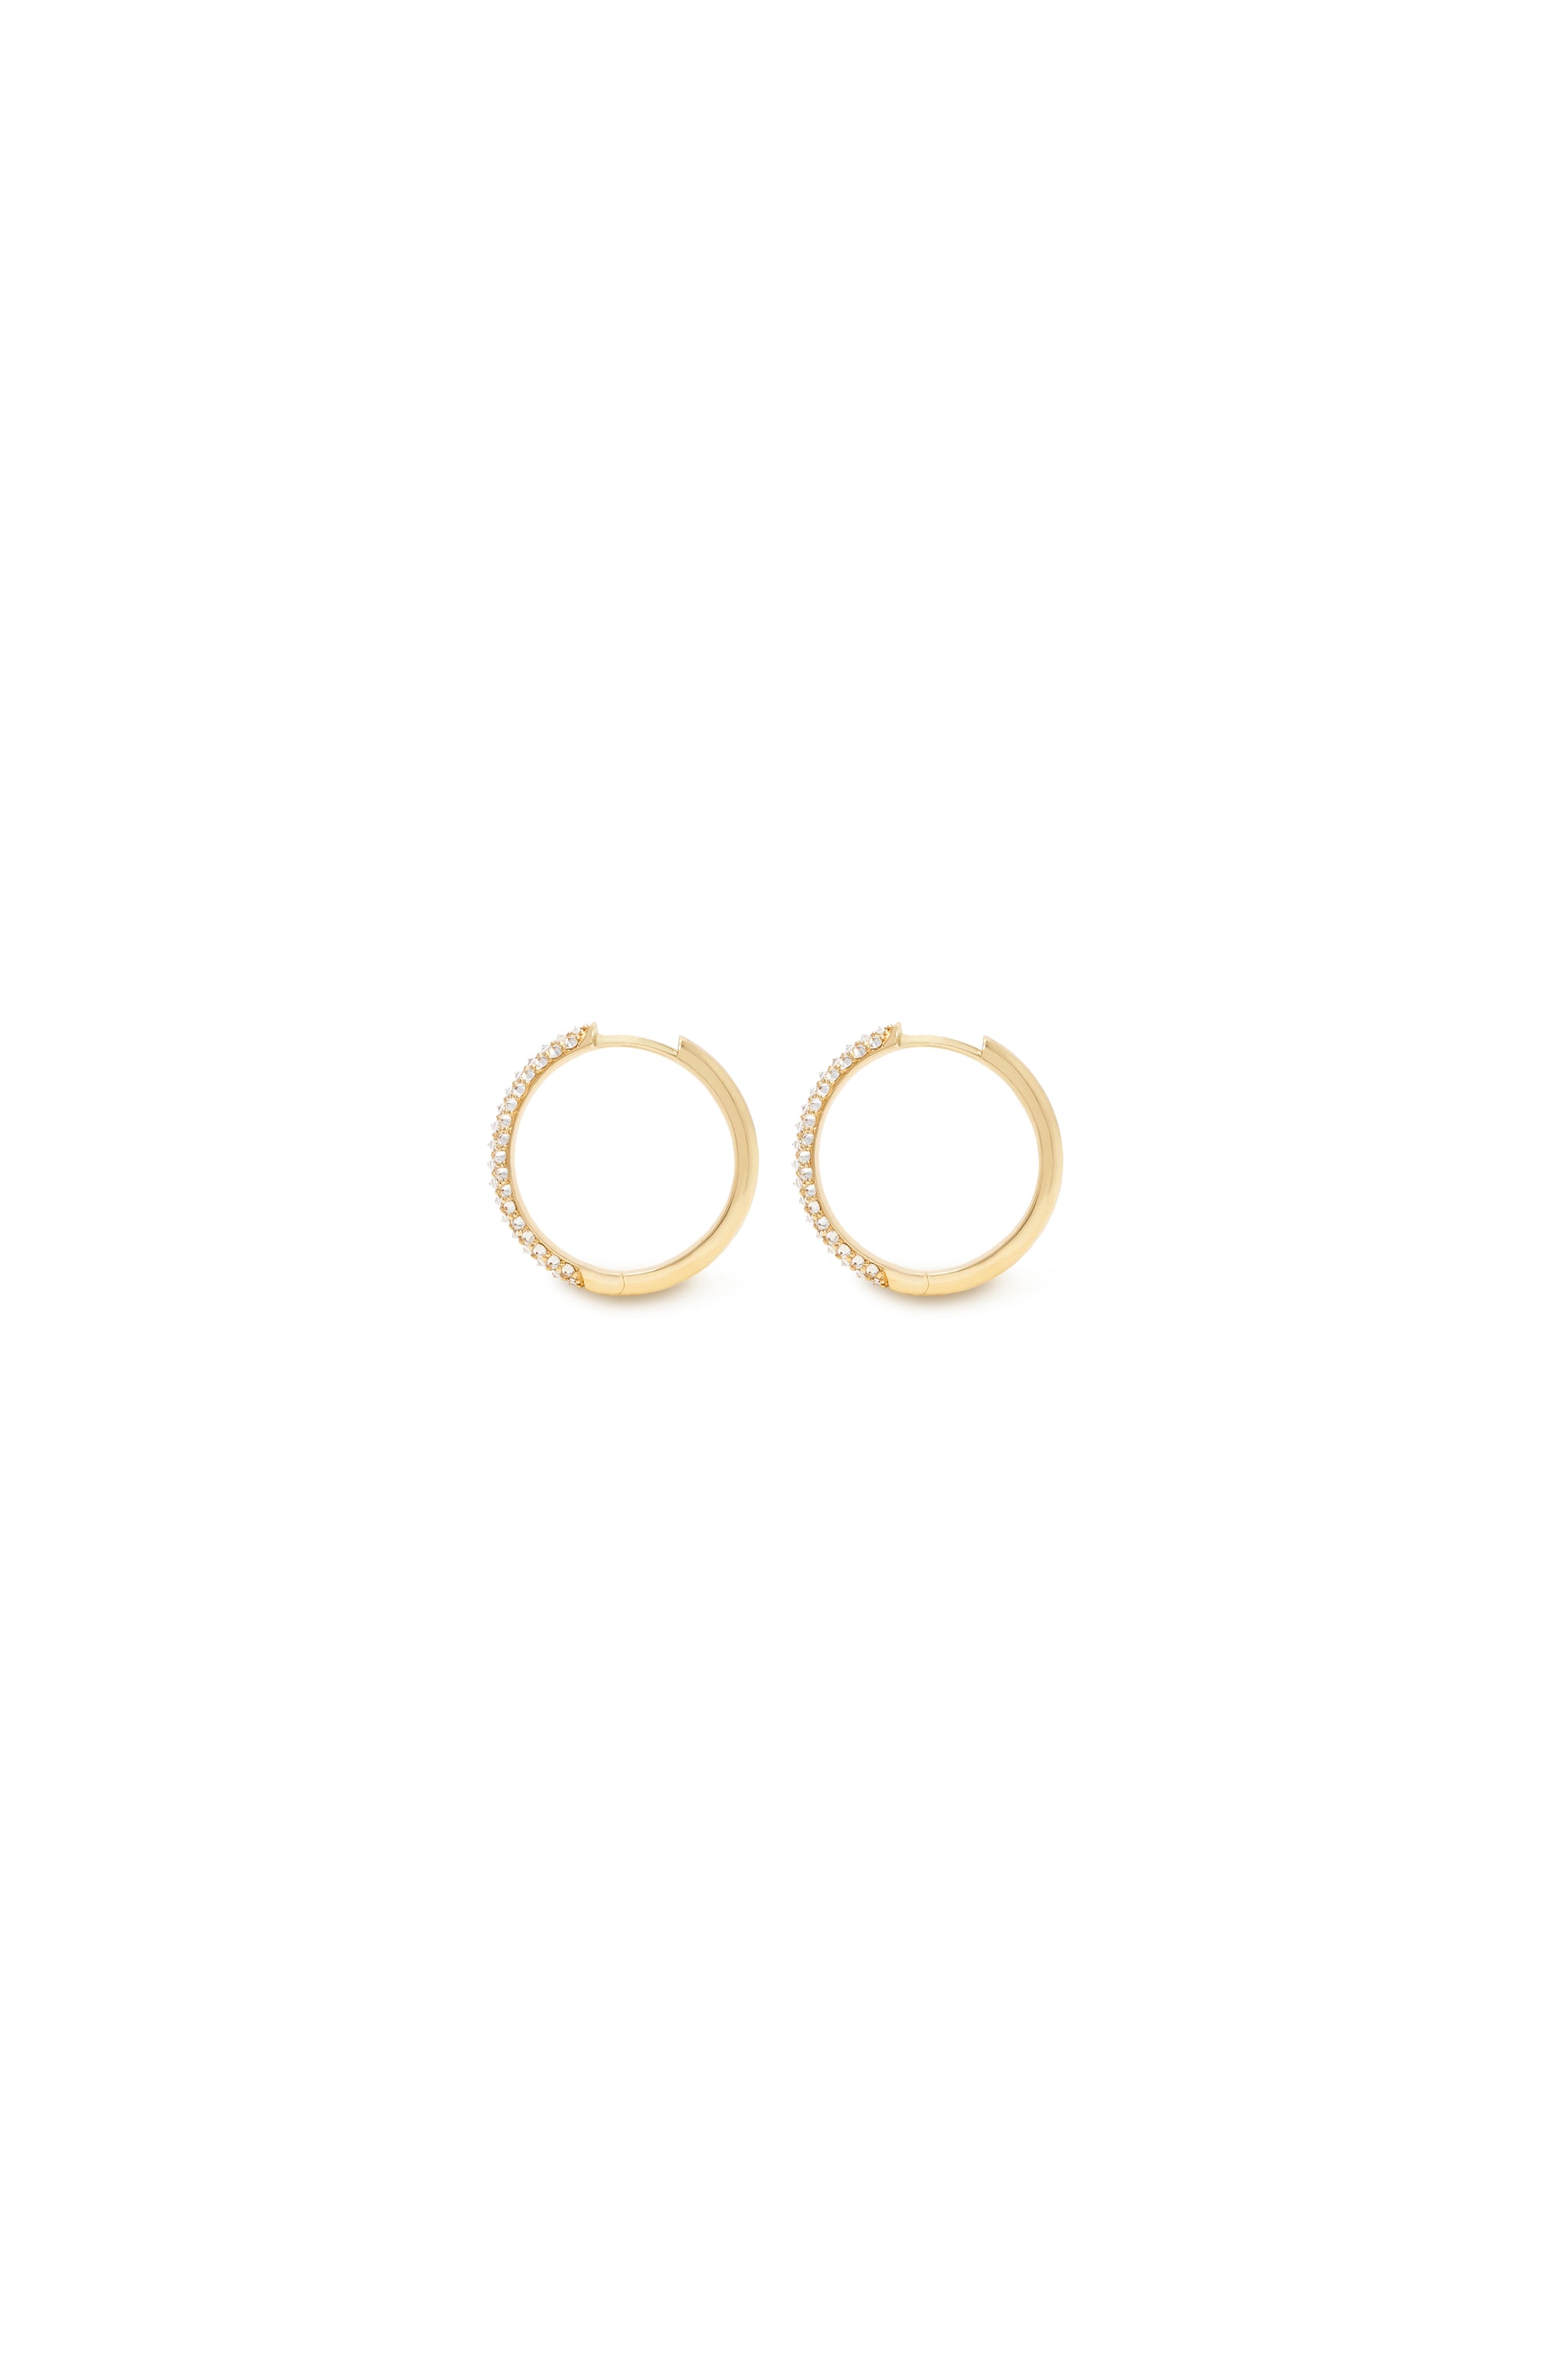 18K yellow gold hoop earrings with Canadian diamonds